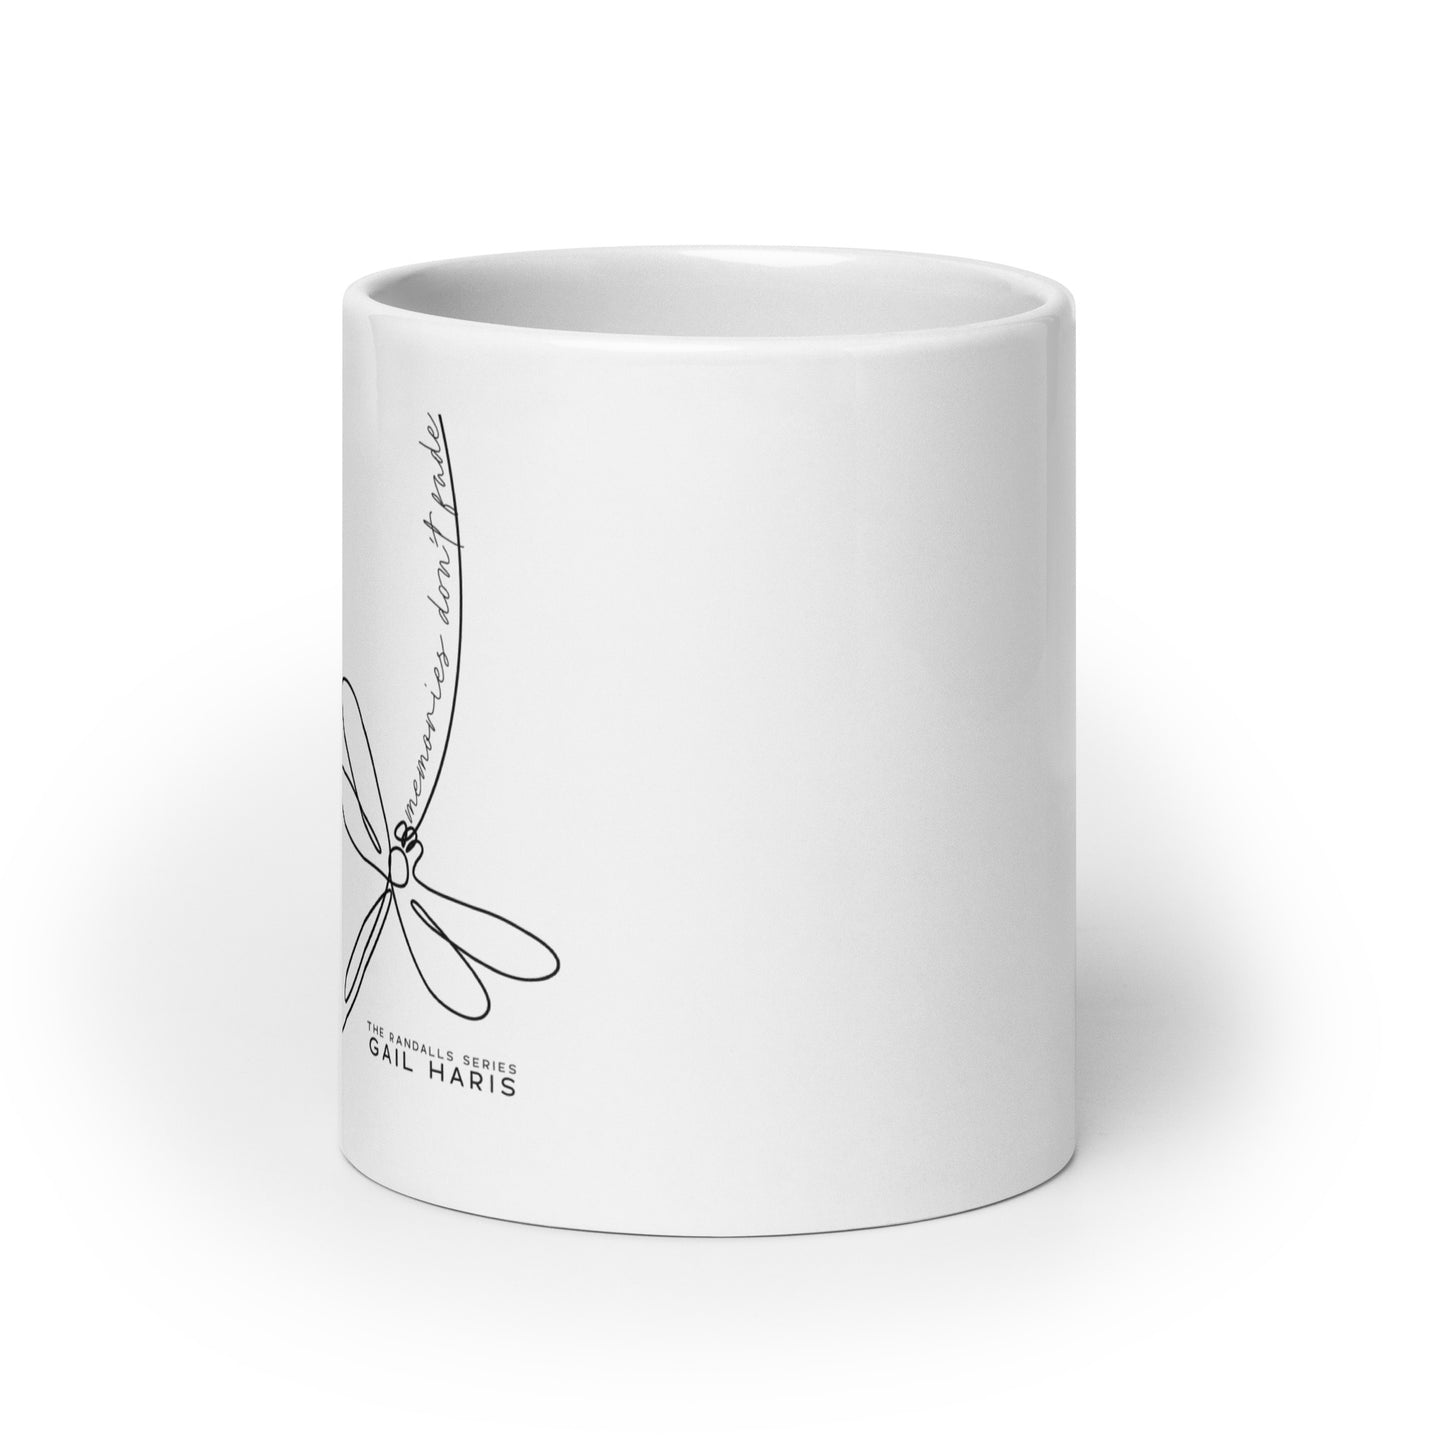 The Randall Series Dragonfly White glossy mug